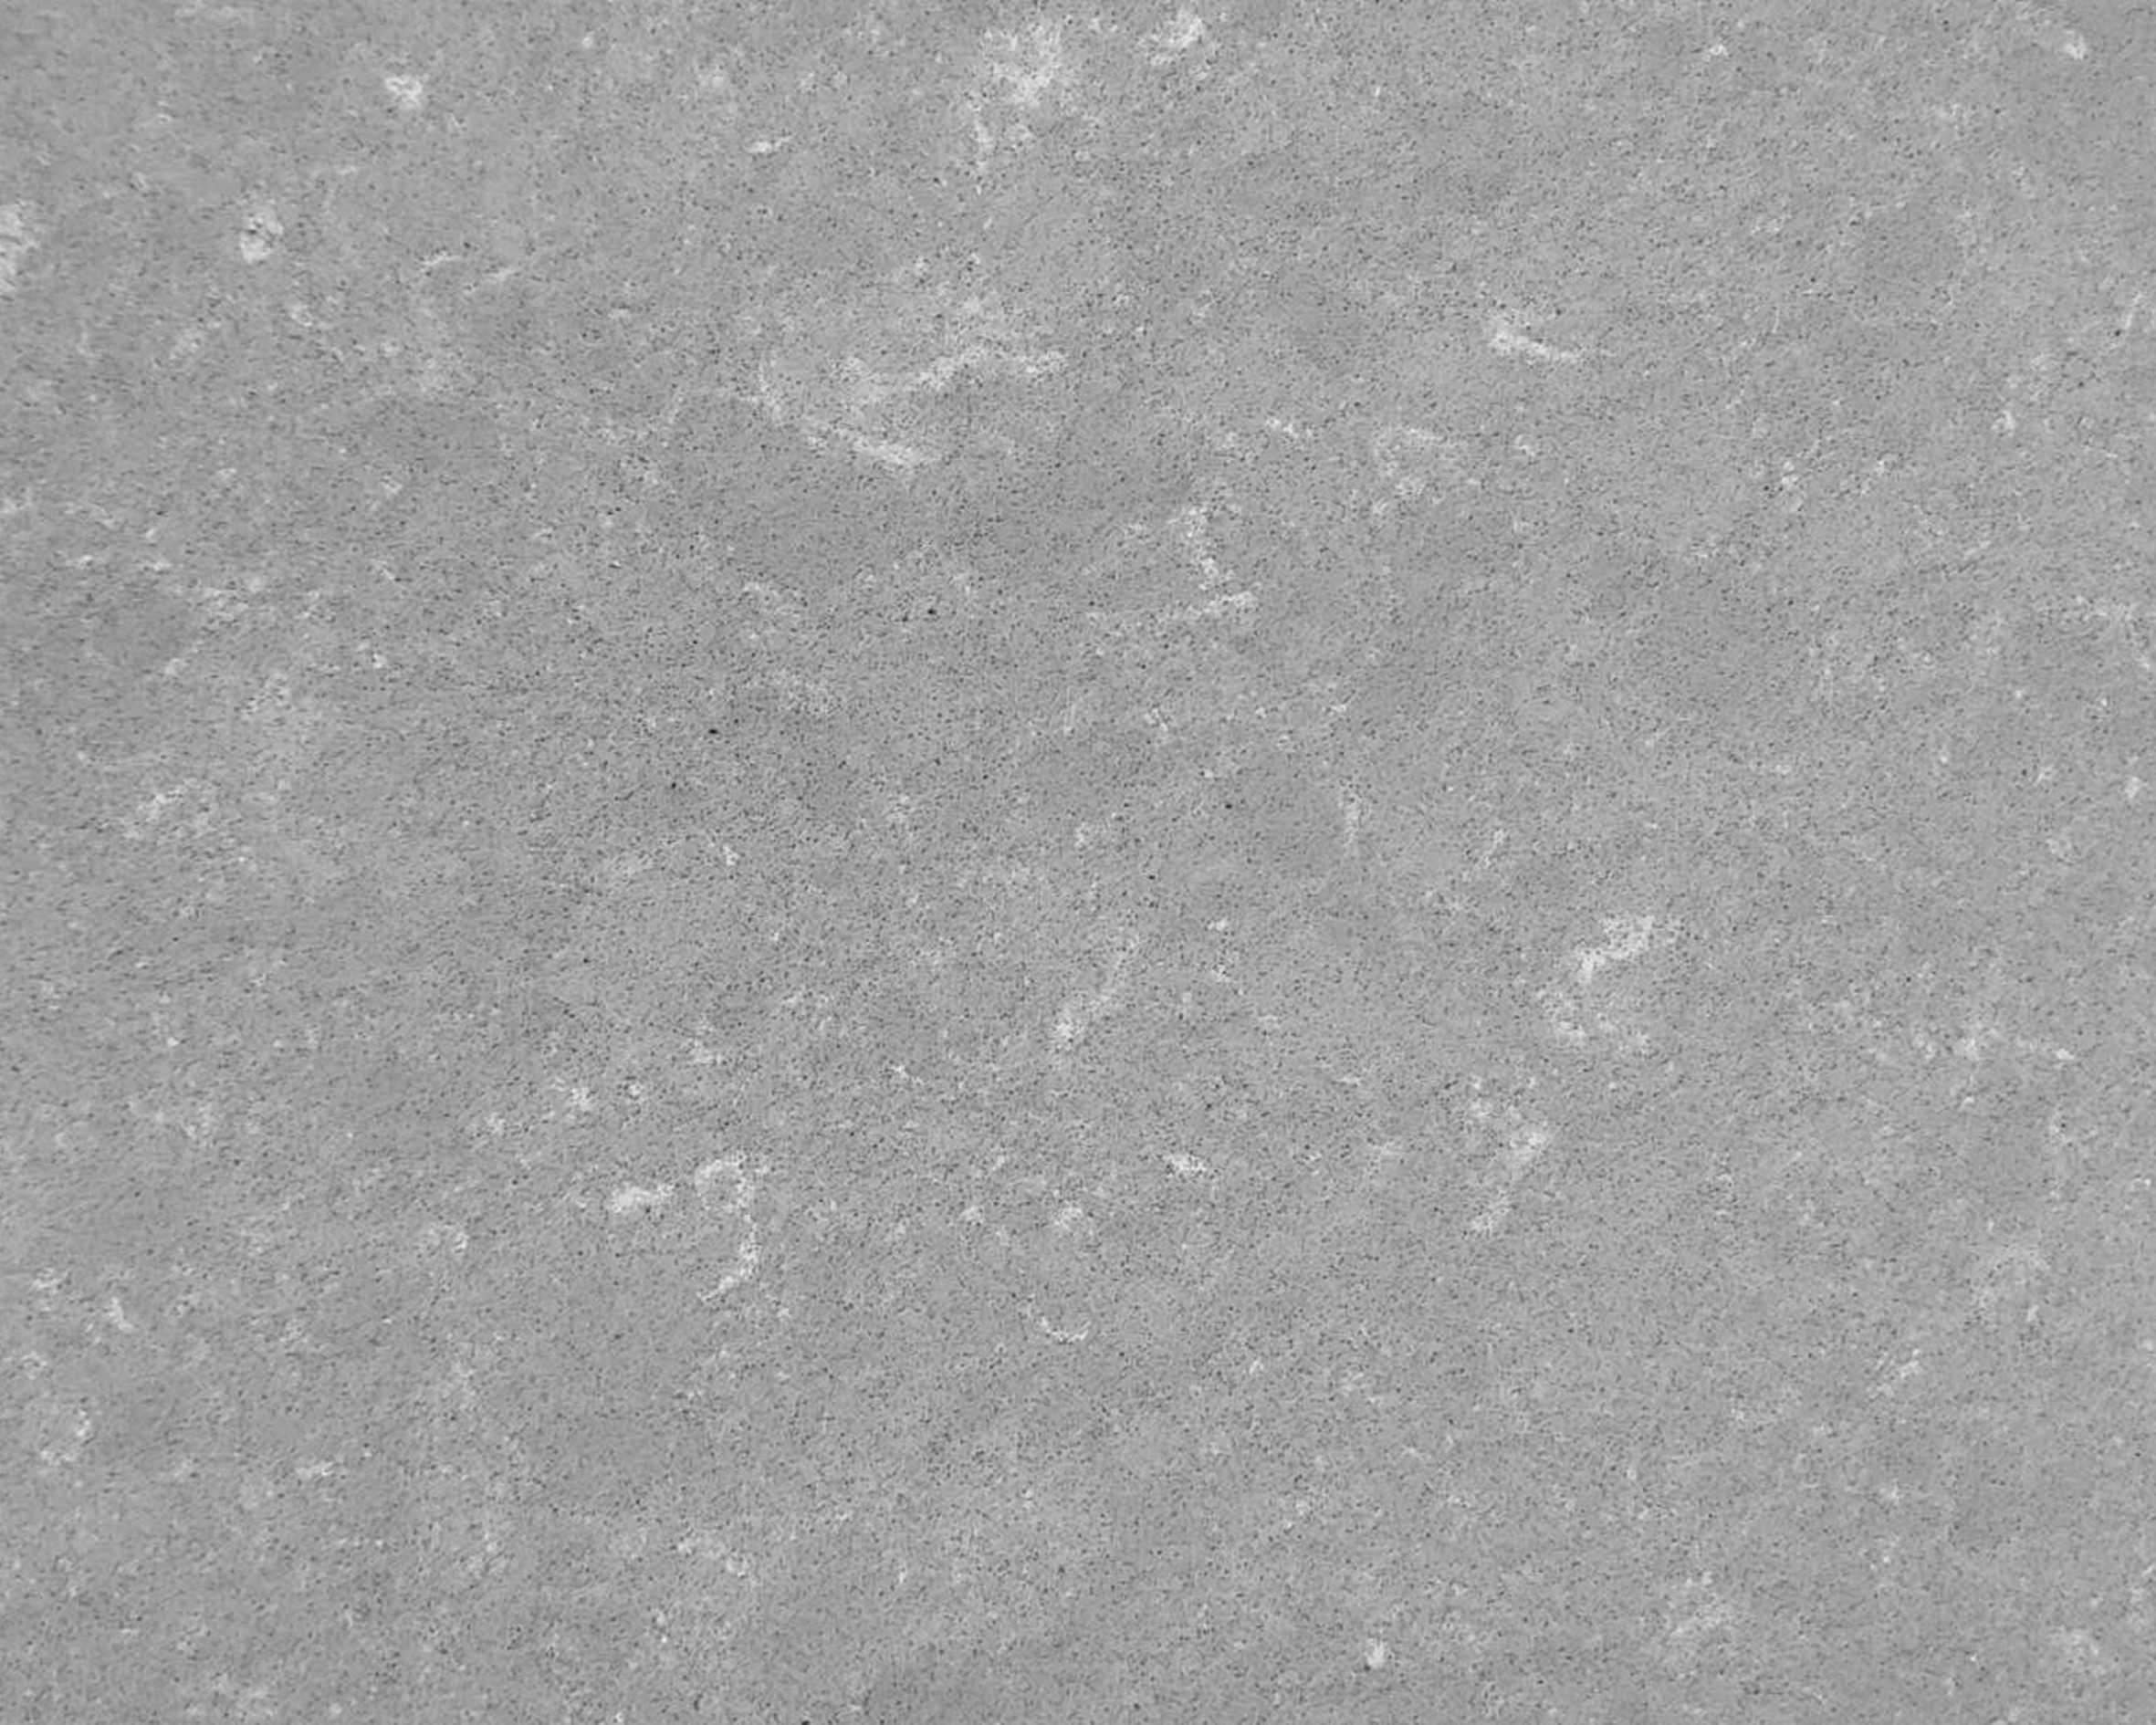 DL-12611 Bosco Grey Quartz Slab Counter Top 